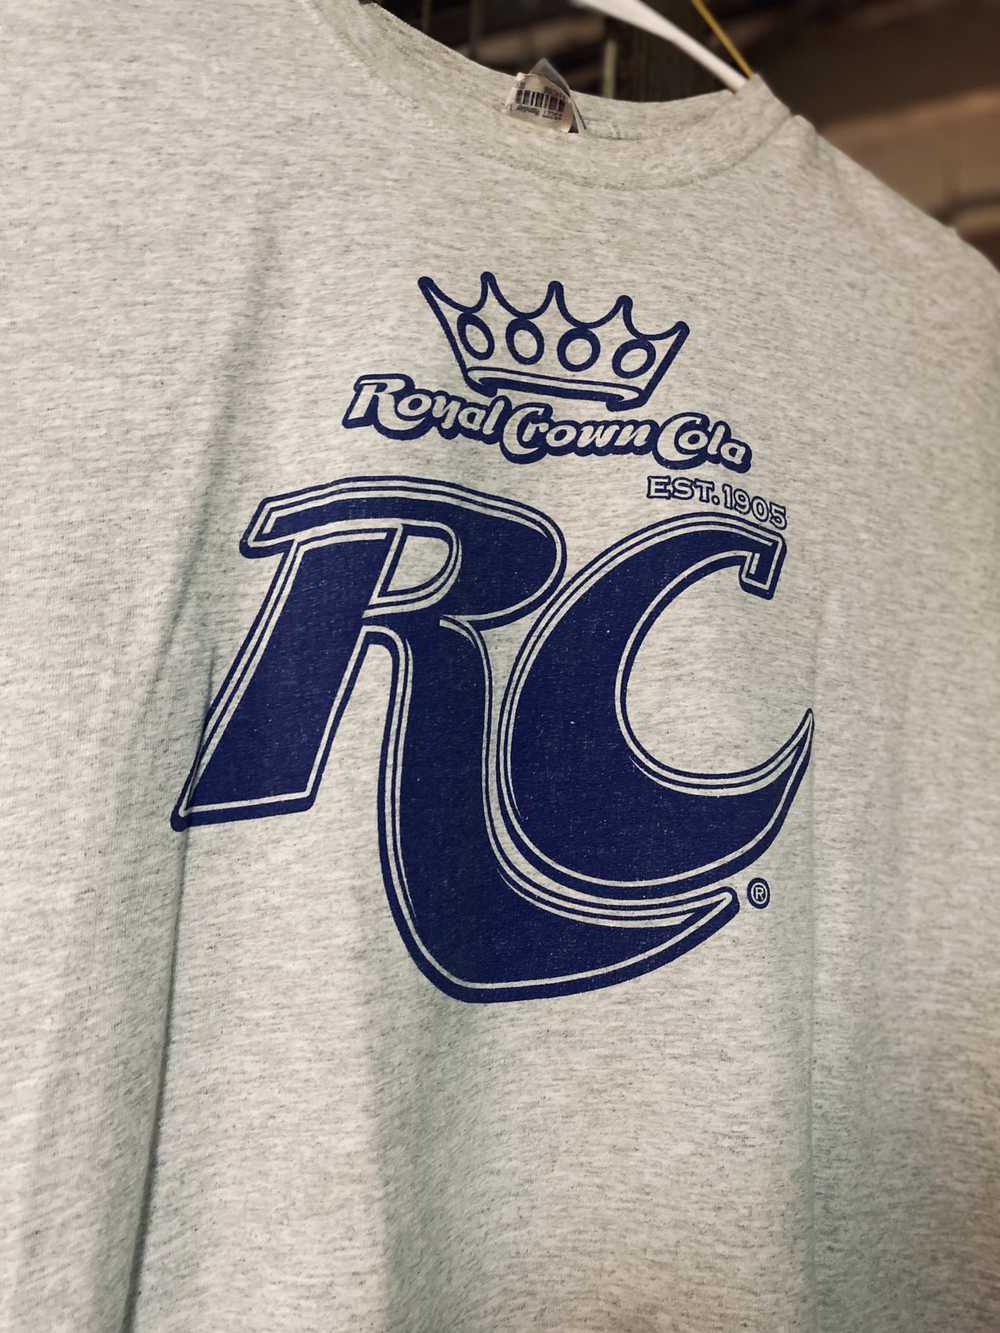 Fruit Of The Loom RC (Royal Crown) Vintage T-Shirt - image 2